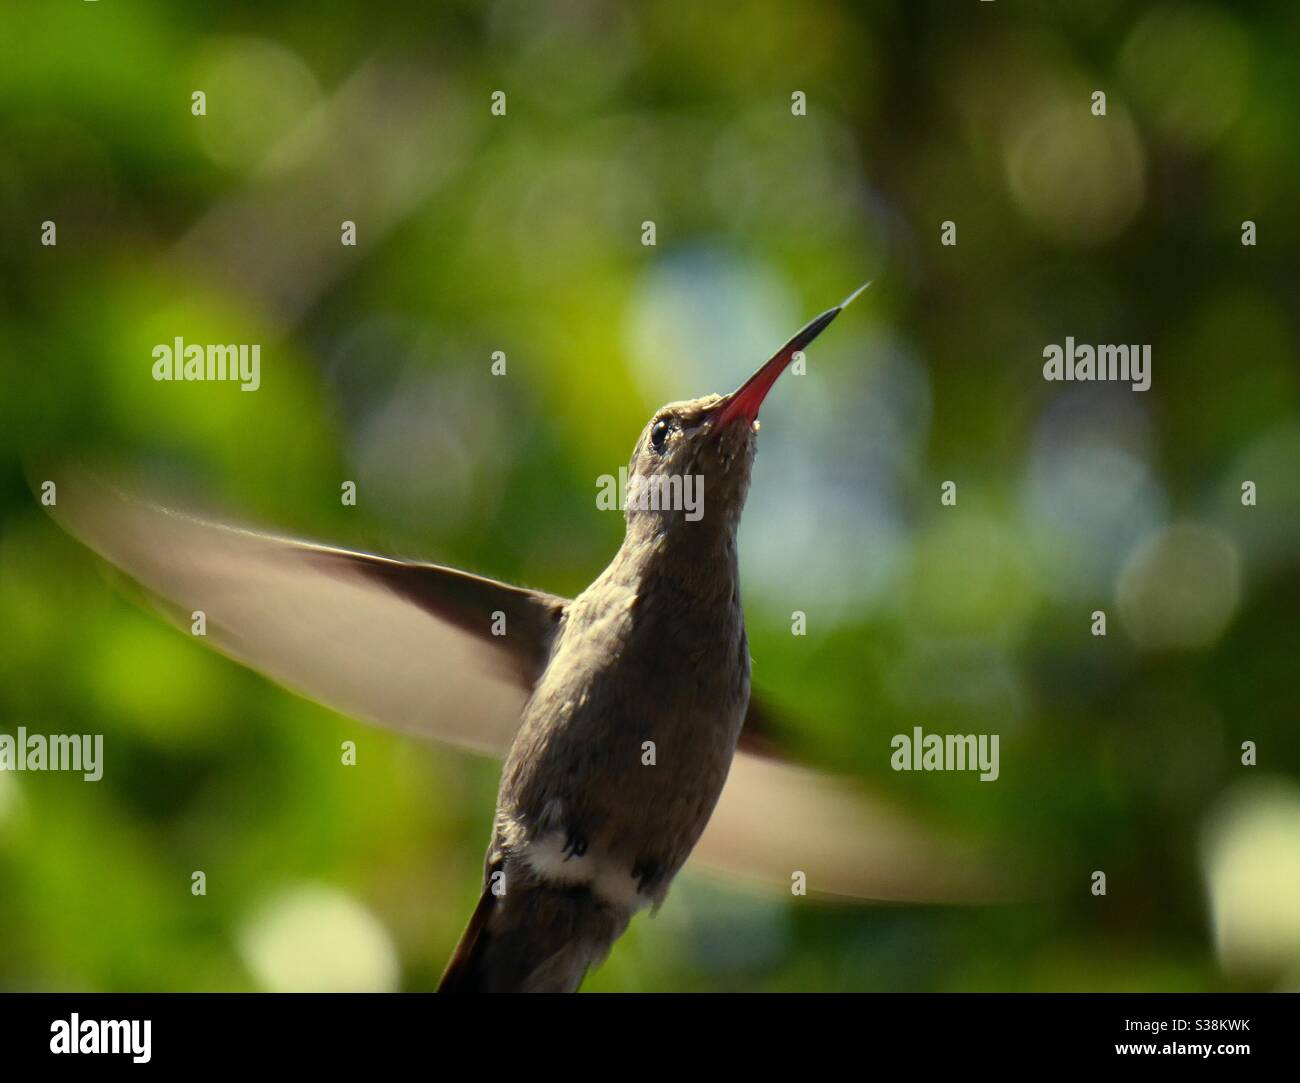 Colibrí/hummingbird Stock Photo